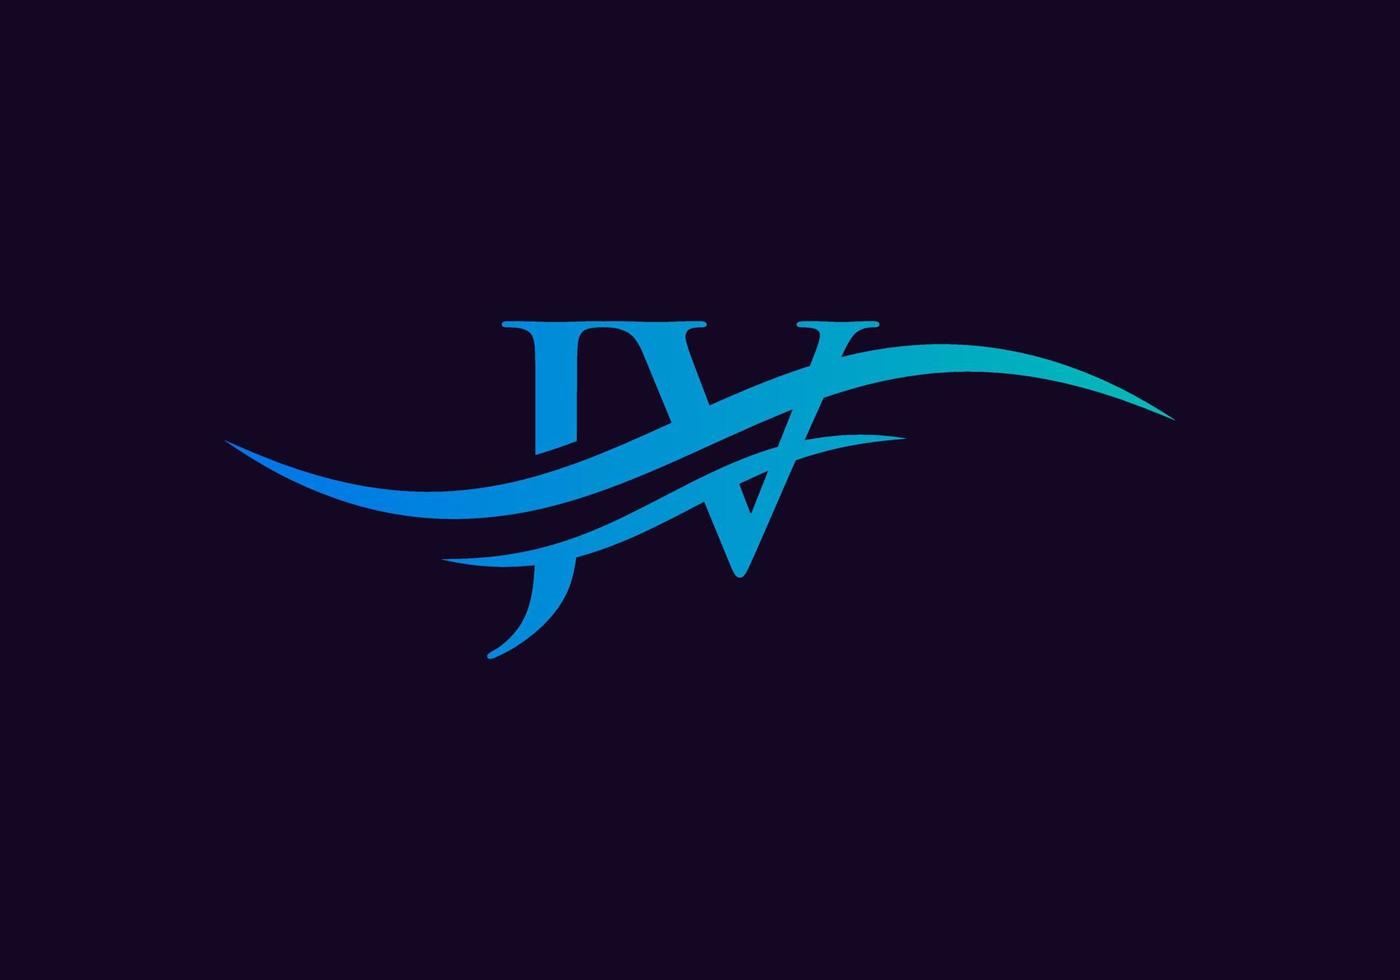 design de logotipo inicial de letra vinculada jv. vetor de design de logotipo jv de letra moderna